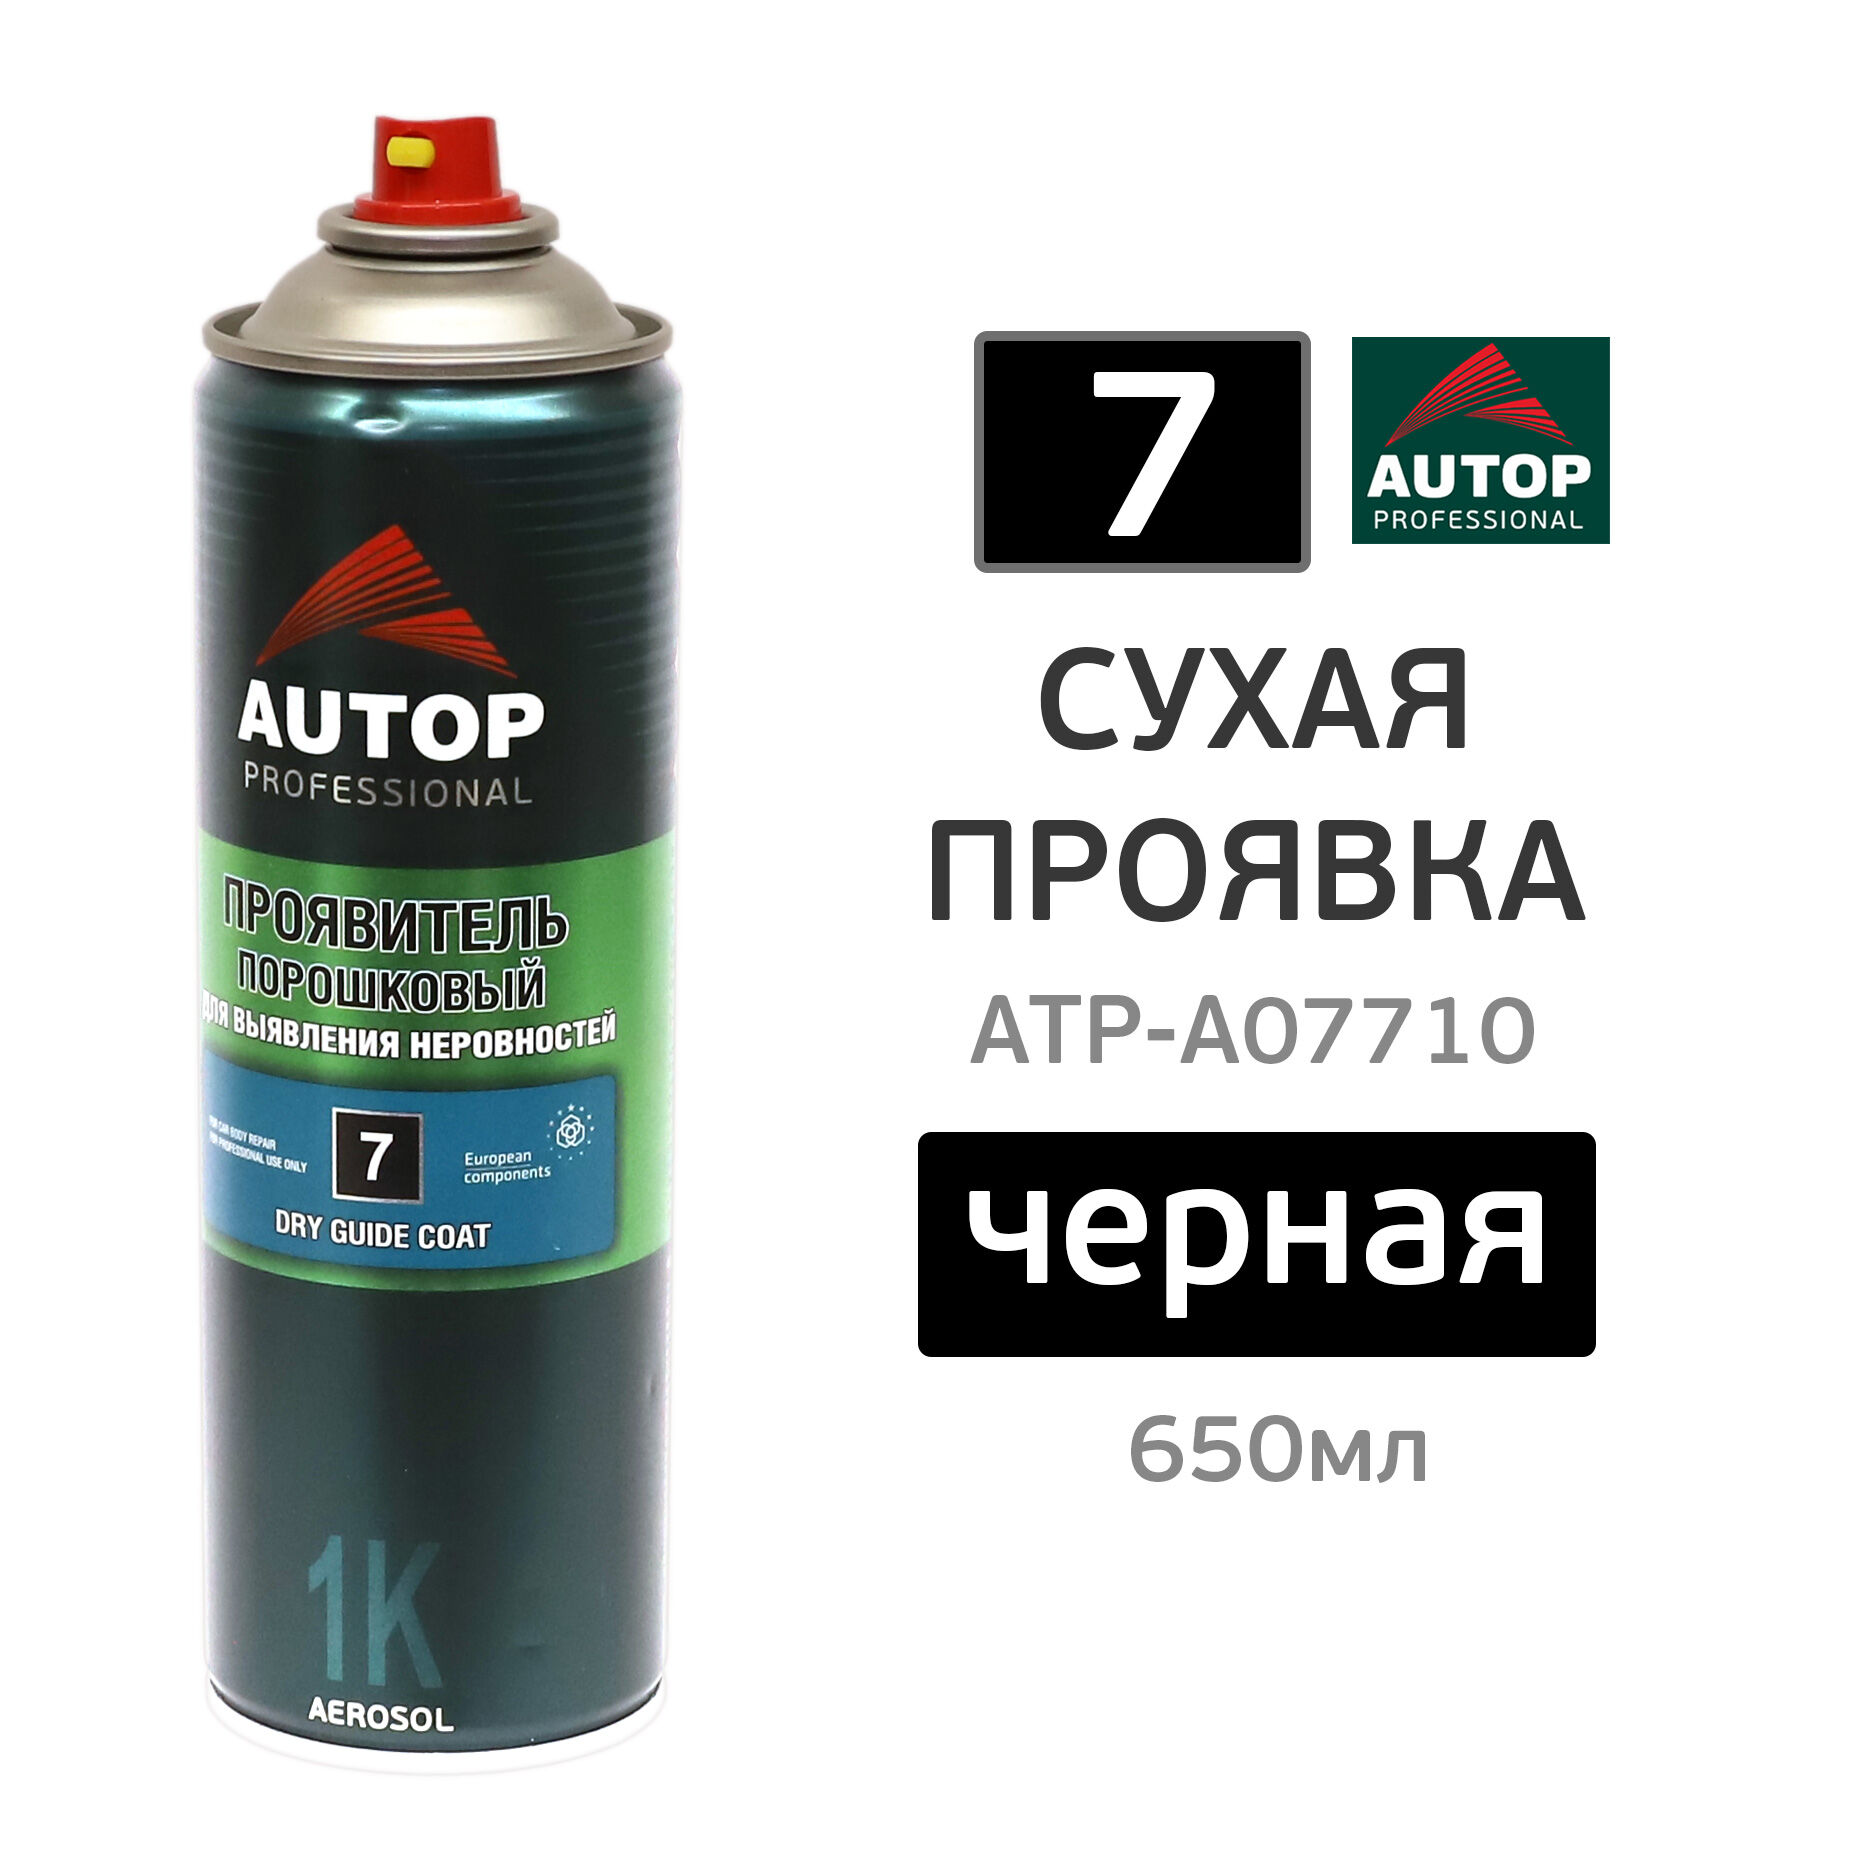 Сухая проявка аэрозольная AUTOP №7 Dry Guide Coat (650мл) черная 2